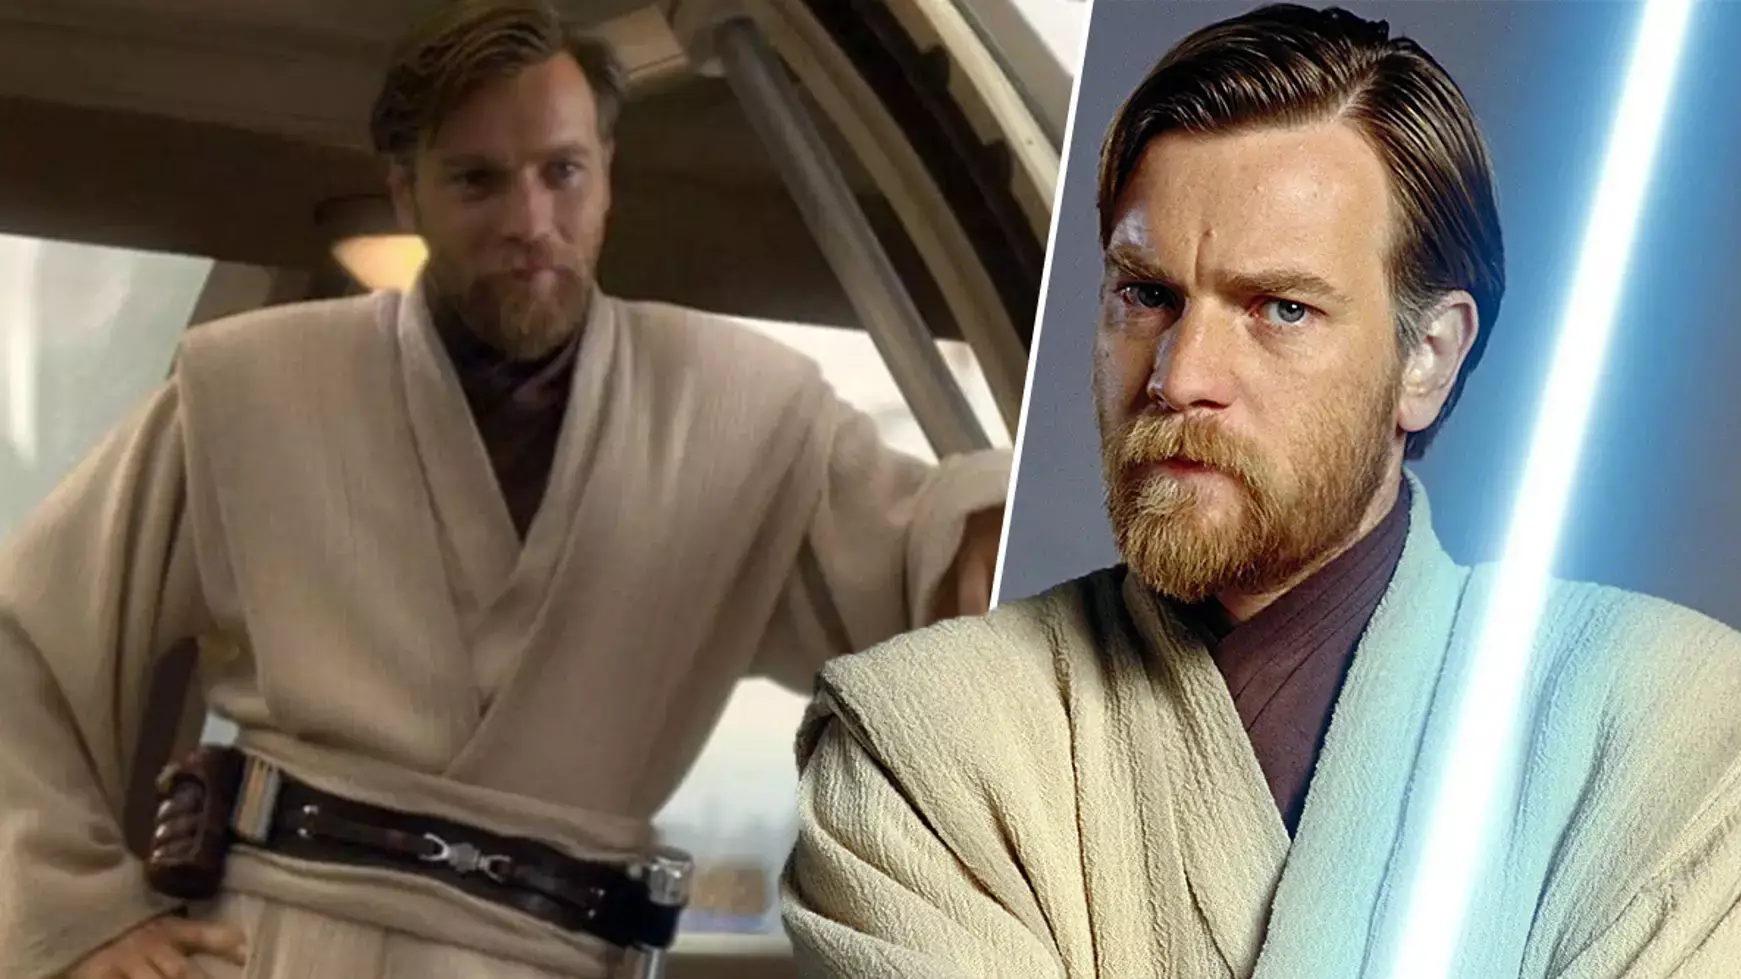 Ewan McGregor Filmed With "Someone Very Special" On Set Of Obi-Wan Kenobi Series